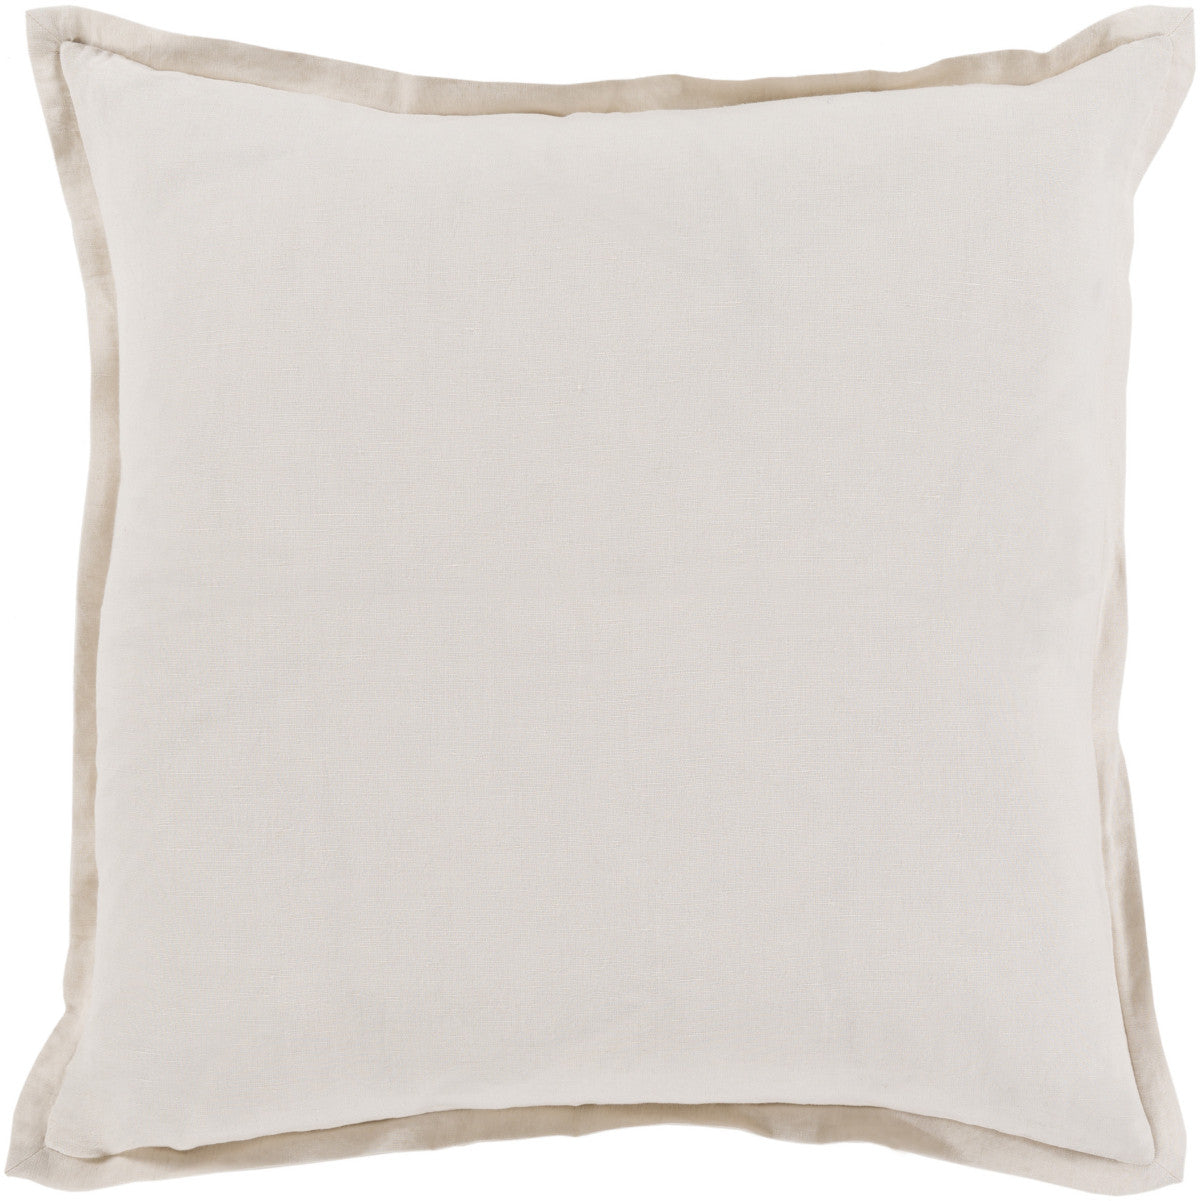 Surya Orianna OR006 Pillow